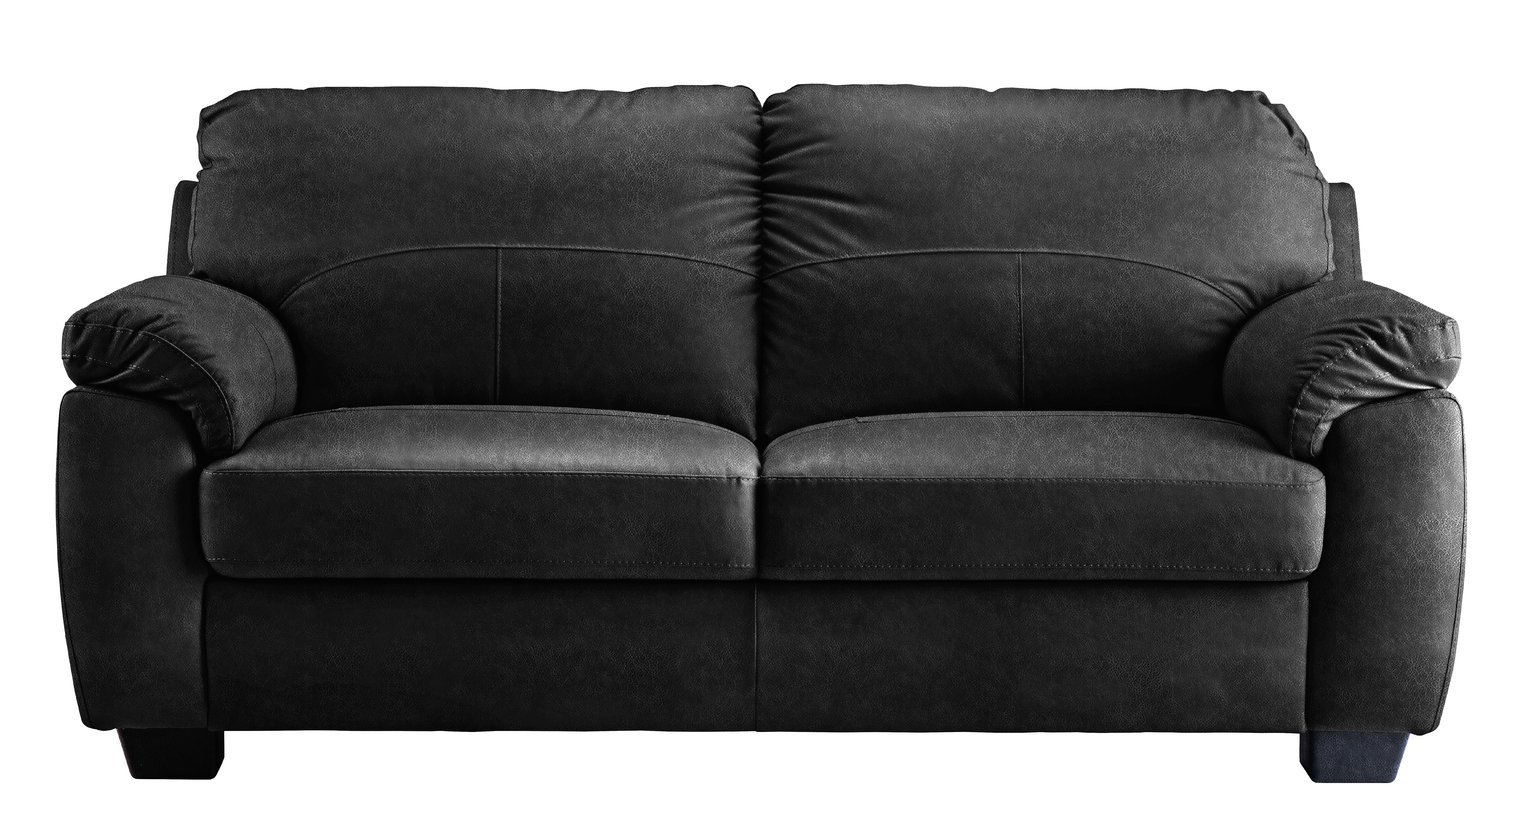 Argos Home Logan 3 Seater Bonded Leather Sofa - Black